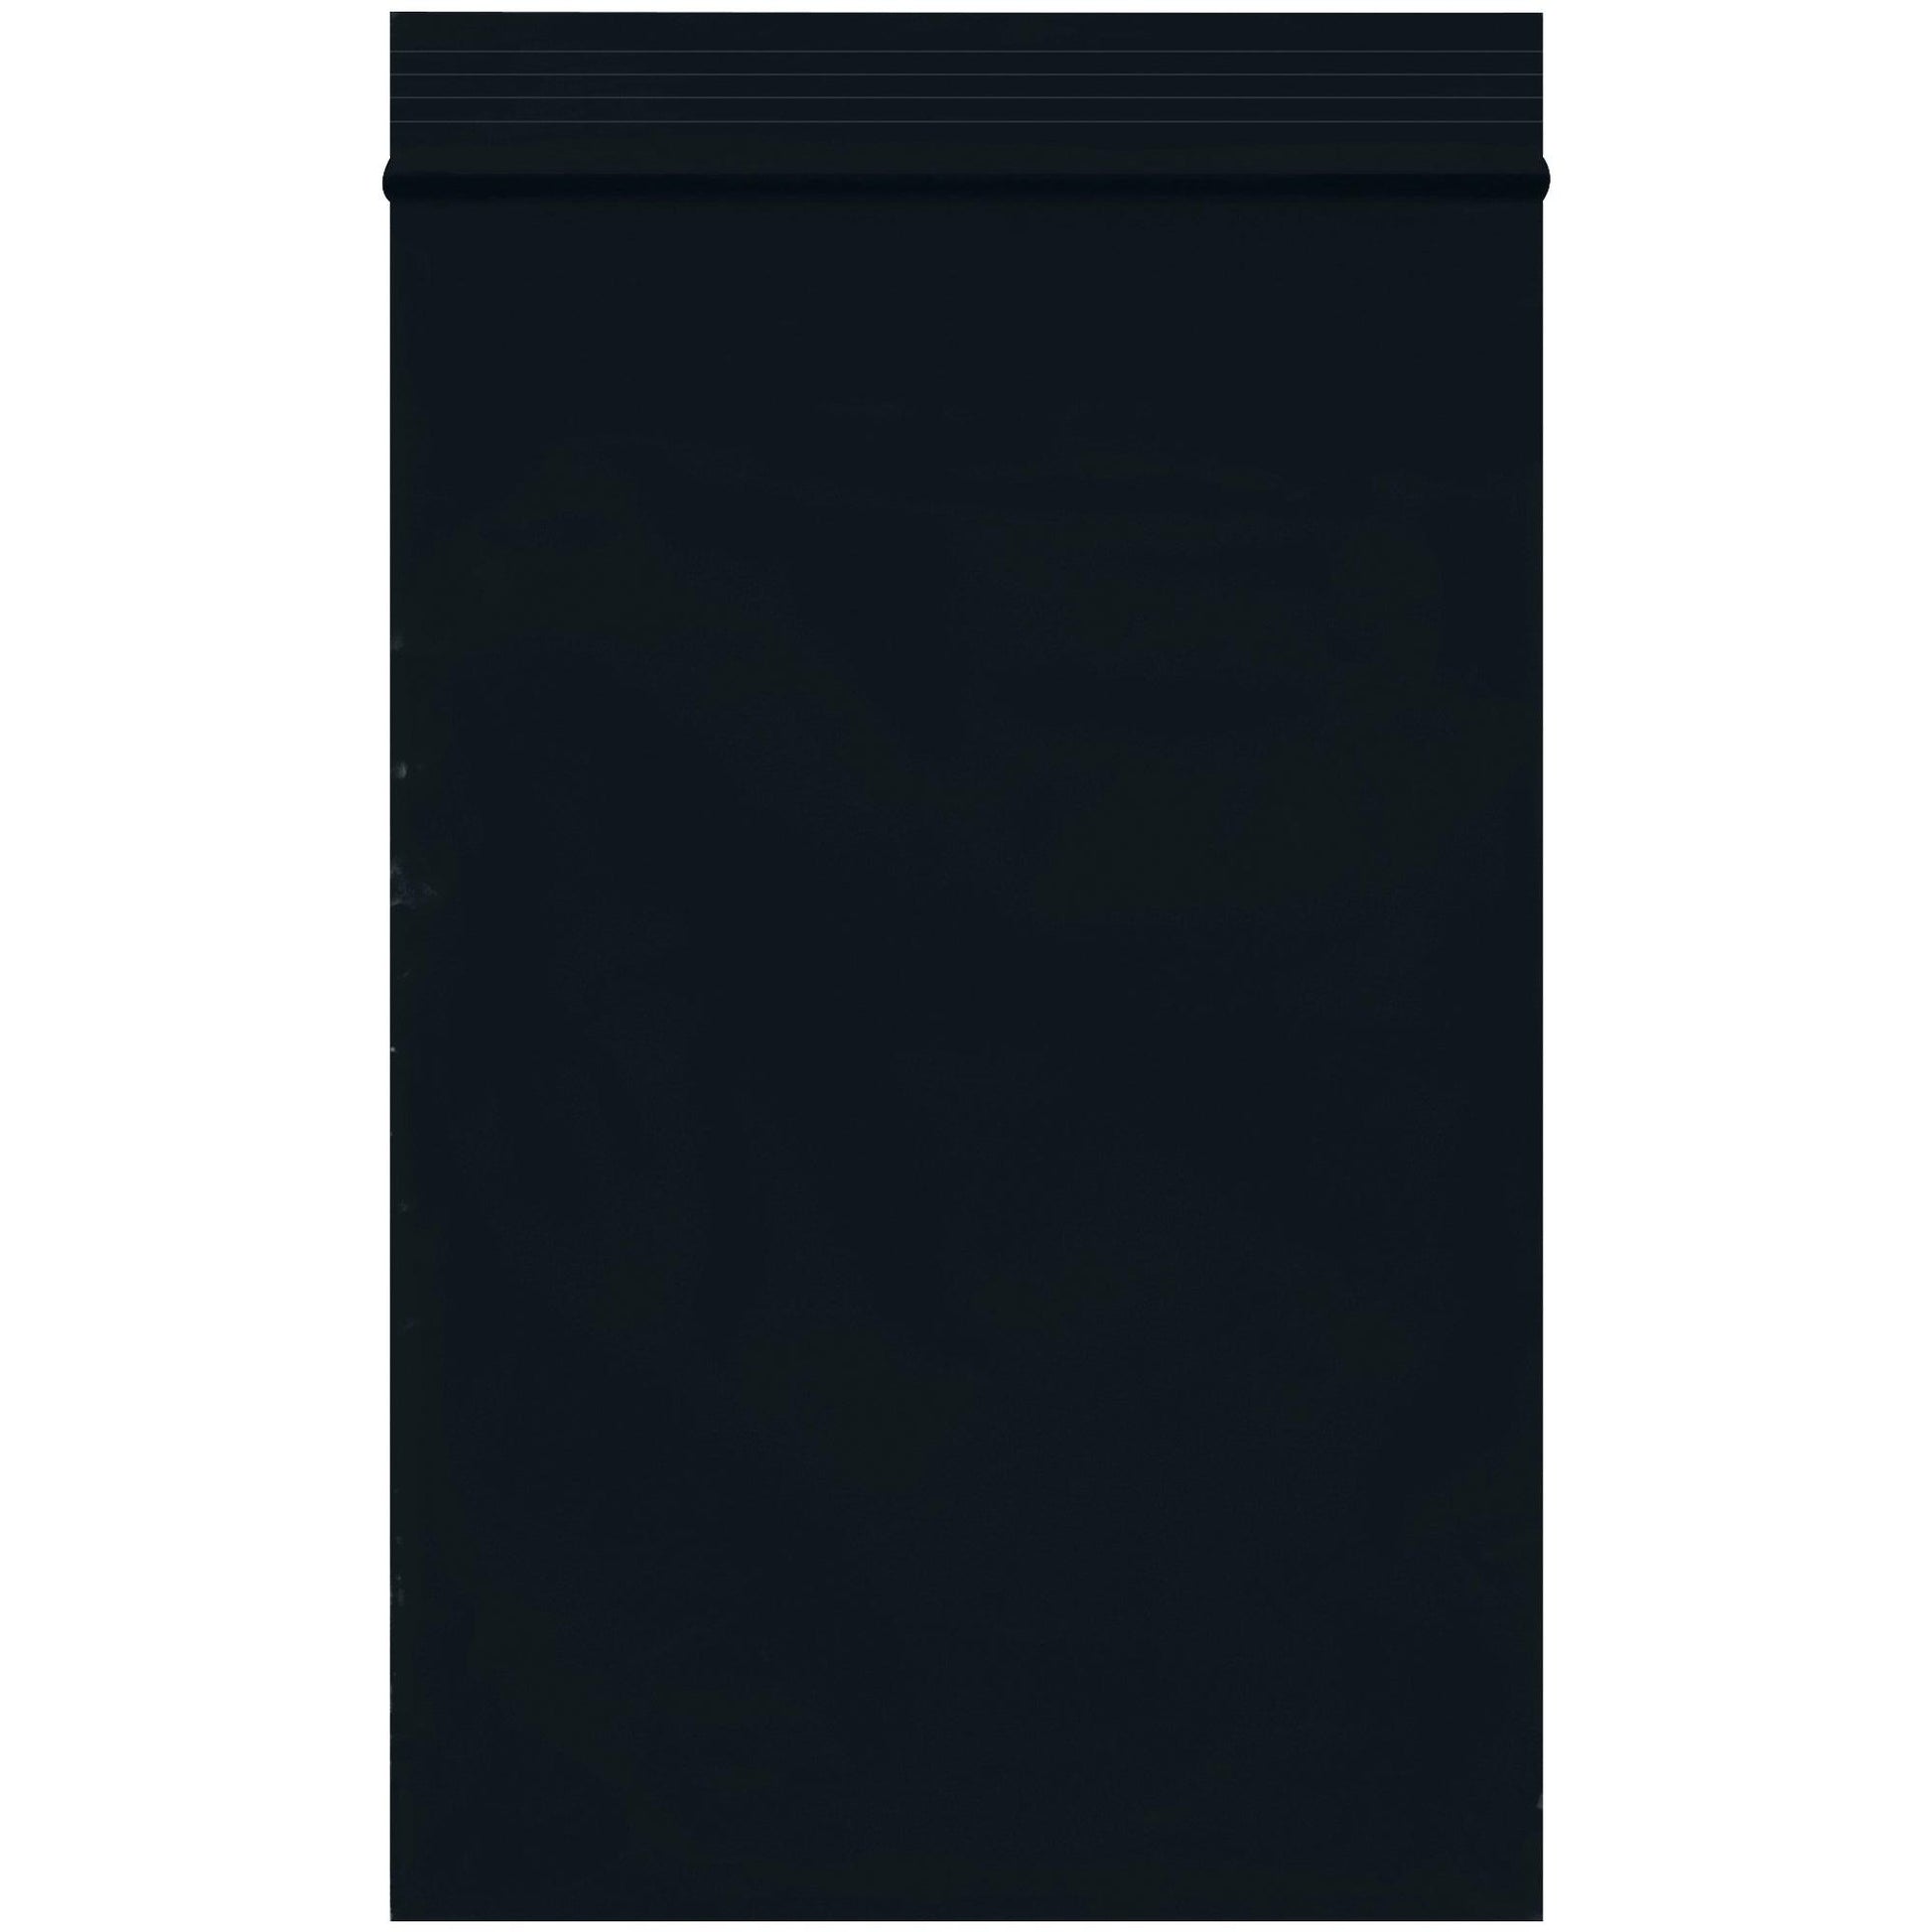 4 x 6" - 2 Mil Black Reclosable Poly Bags - PB3565BK